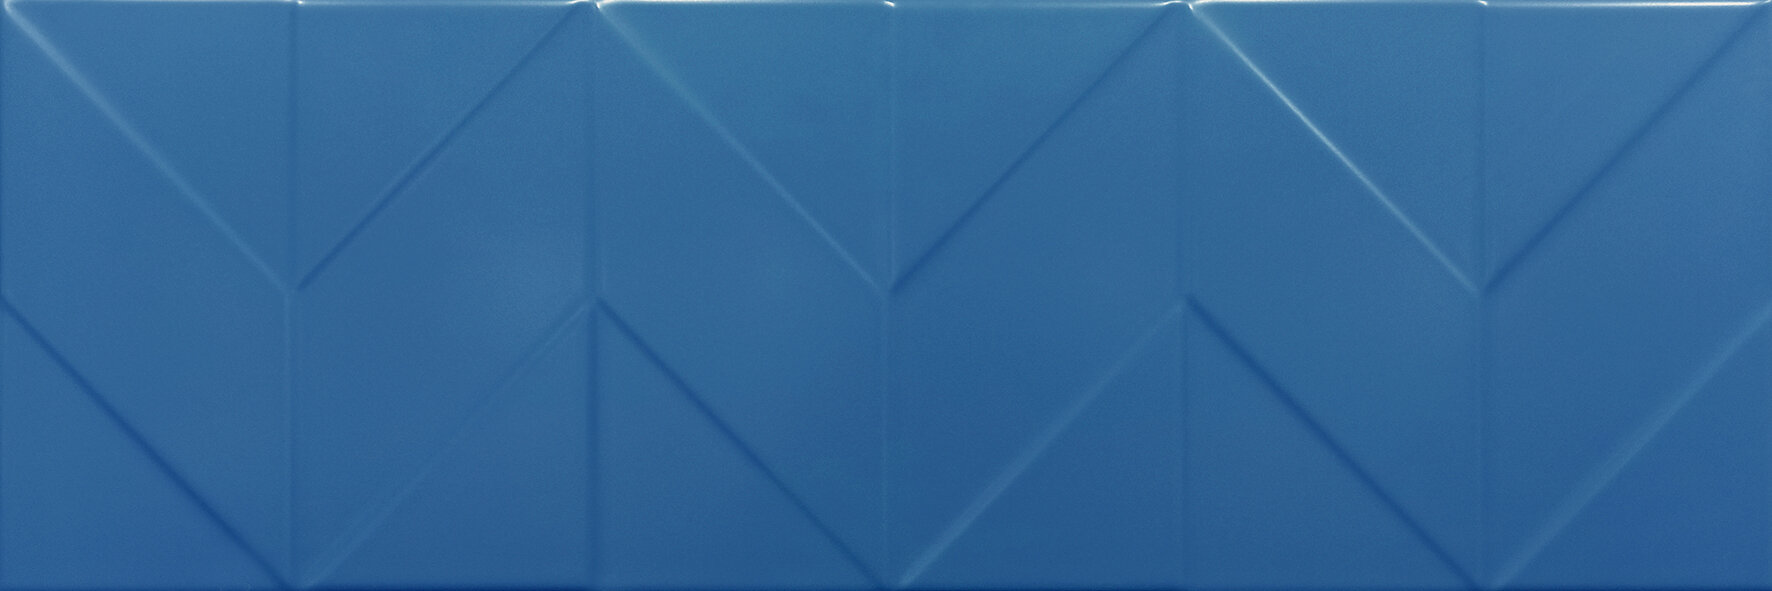 Керамическая плитка Керамин Танага тёмно-синяя, шеврон 75х25 см